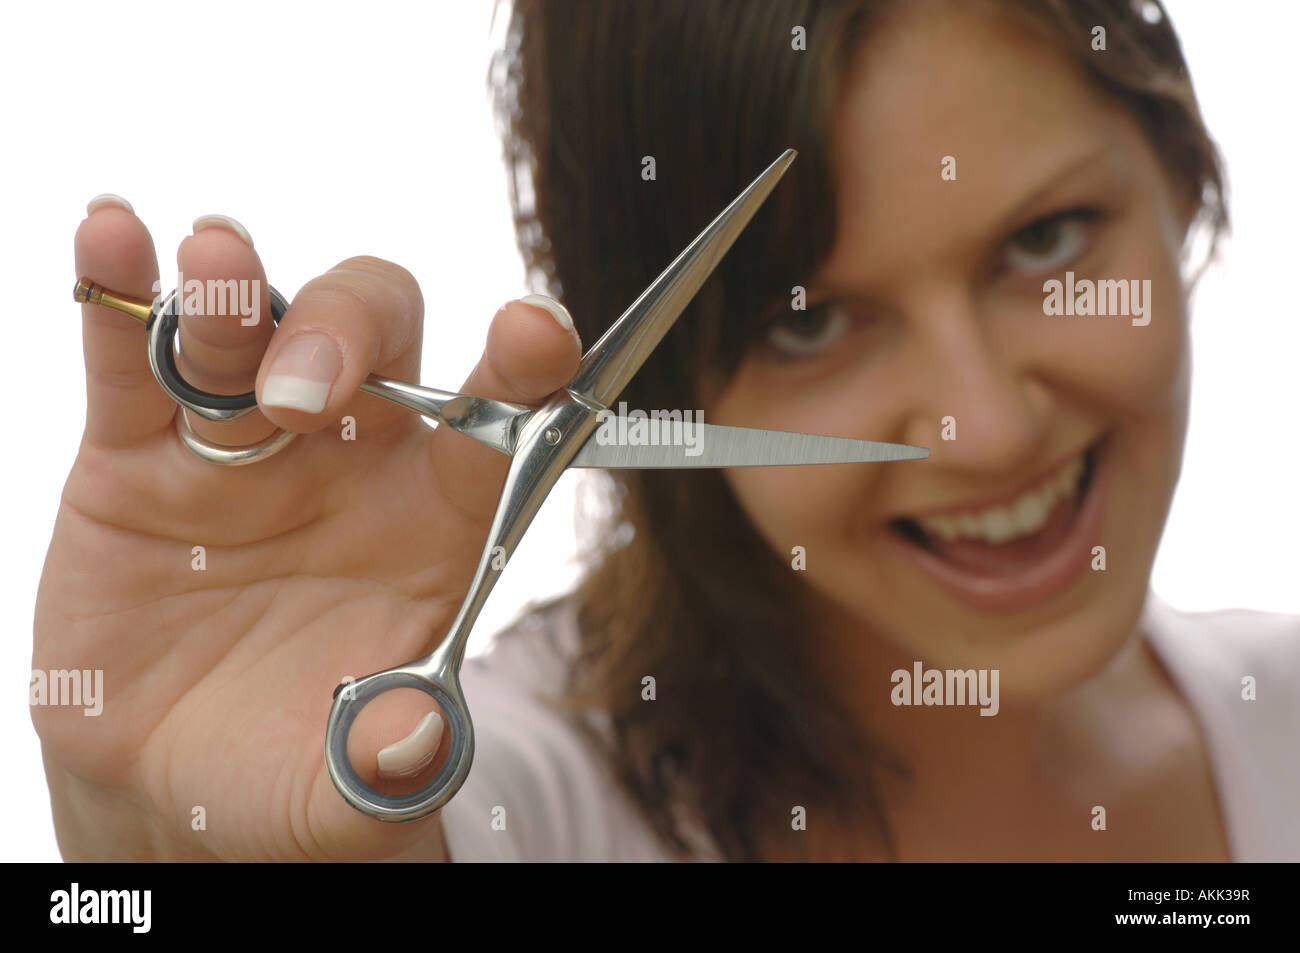 hairdresser holding a scissors Stock Photo